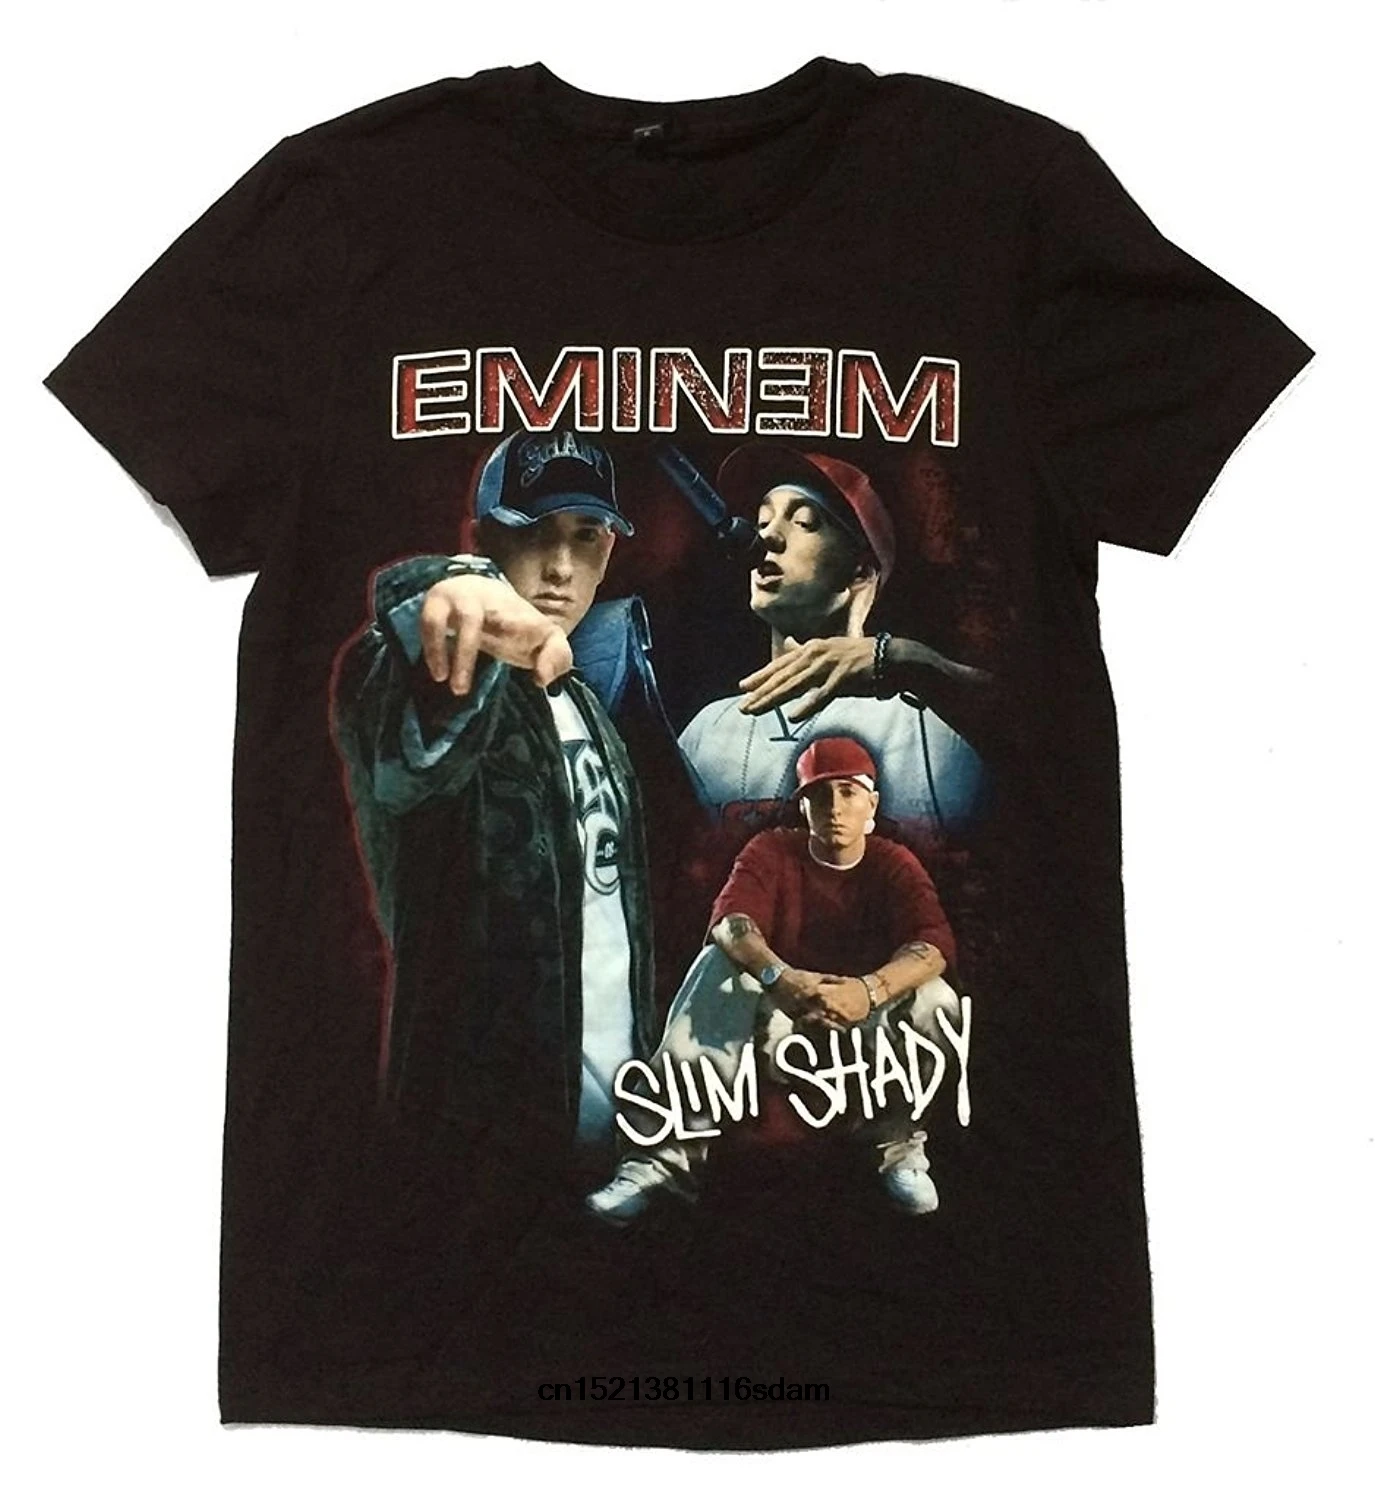 

Funny Men t shirt white t-shirt tshirts Black tee Eminem Pointing Slim Shady Pics Jumbo Image T Shirt Black Plus Size